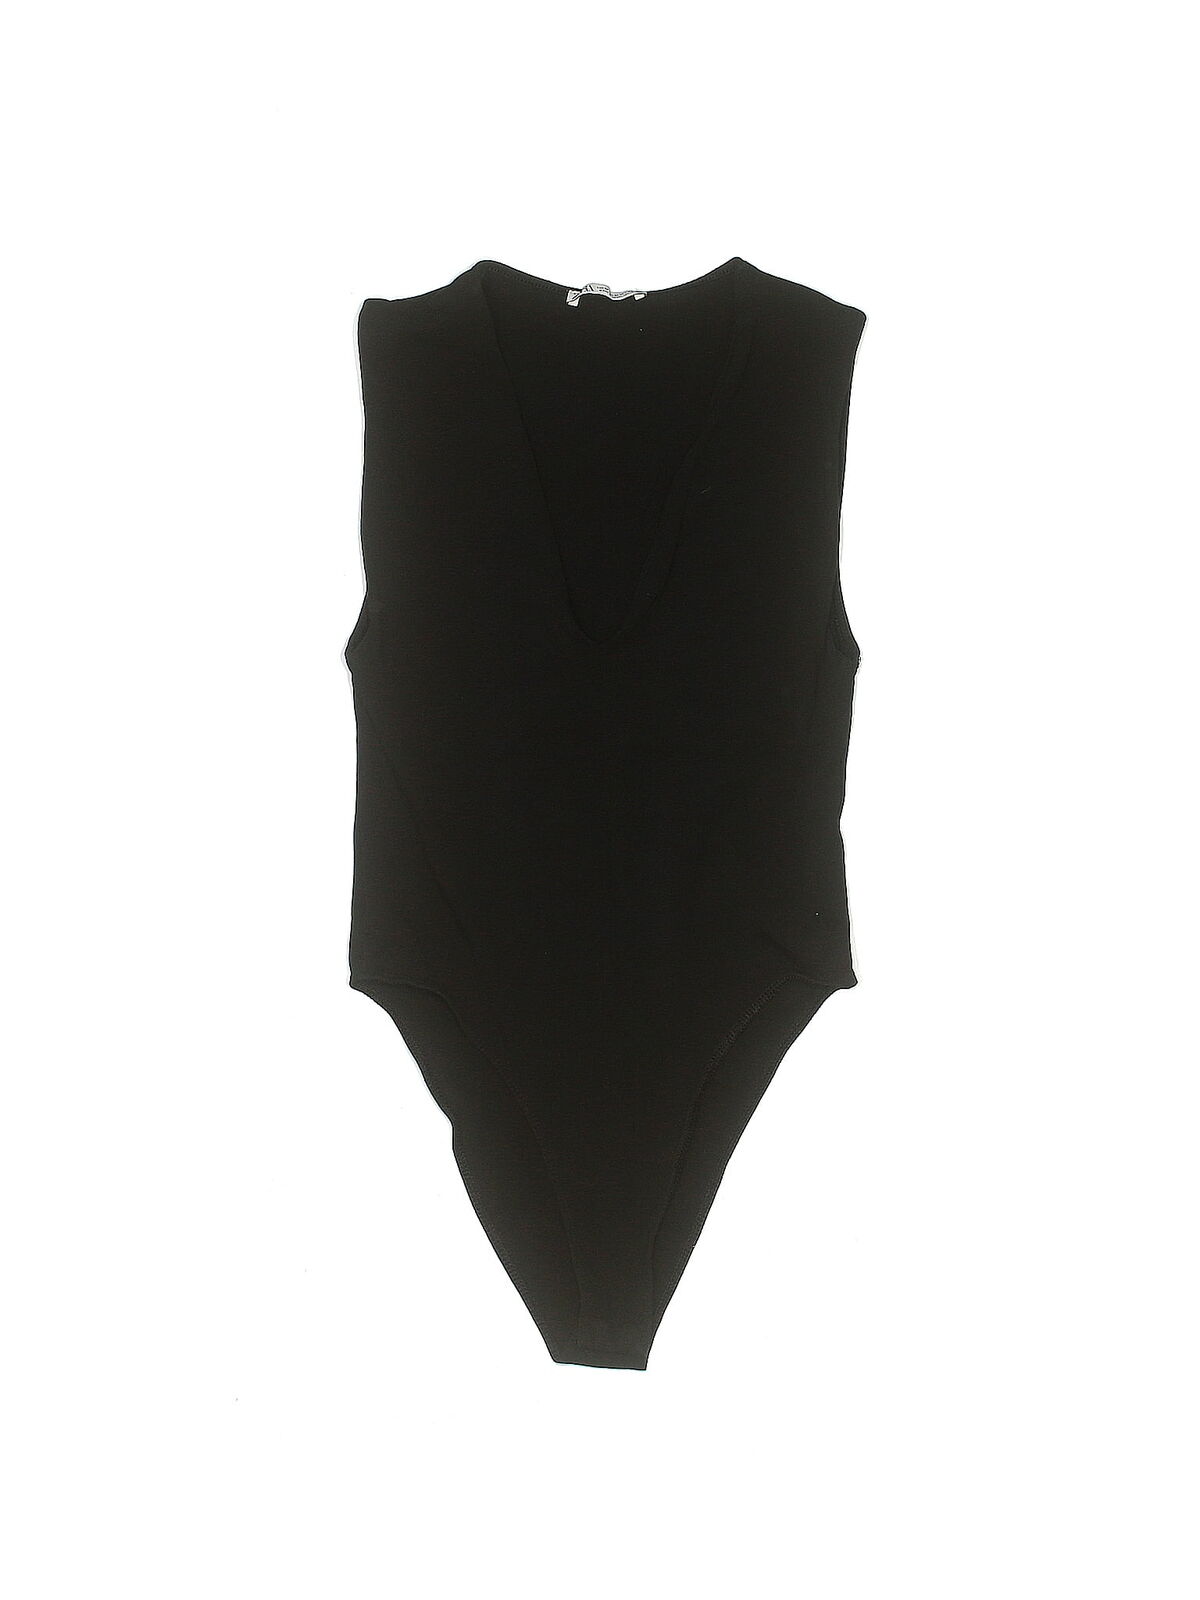 Zara Women Black Bodysuit M - image 1